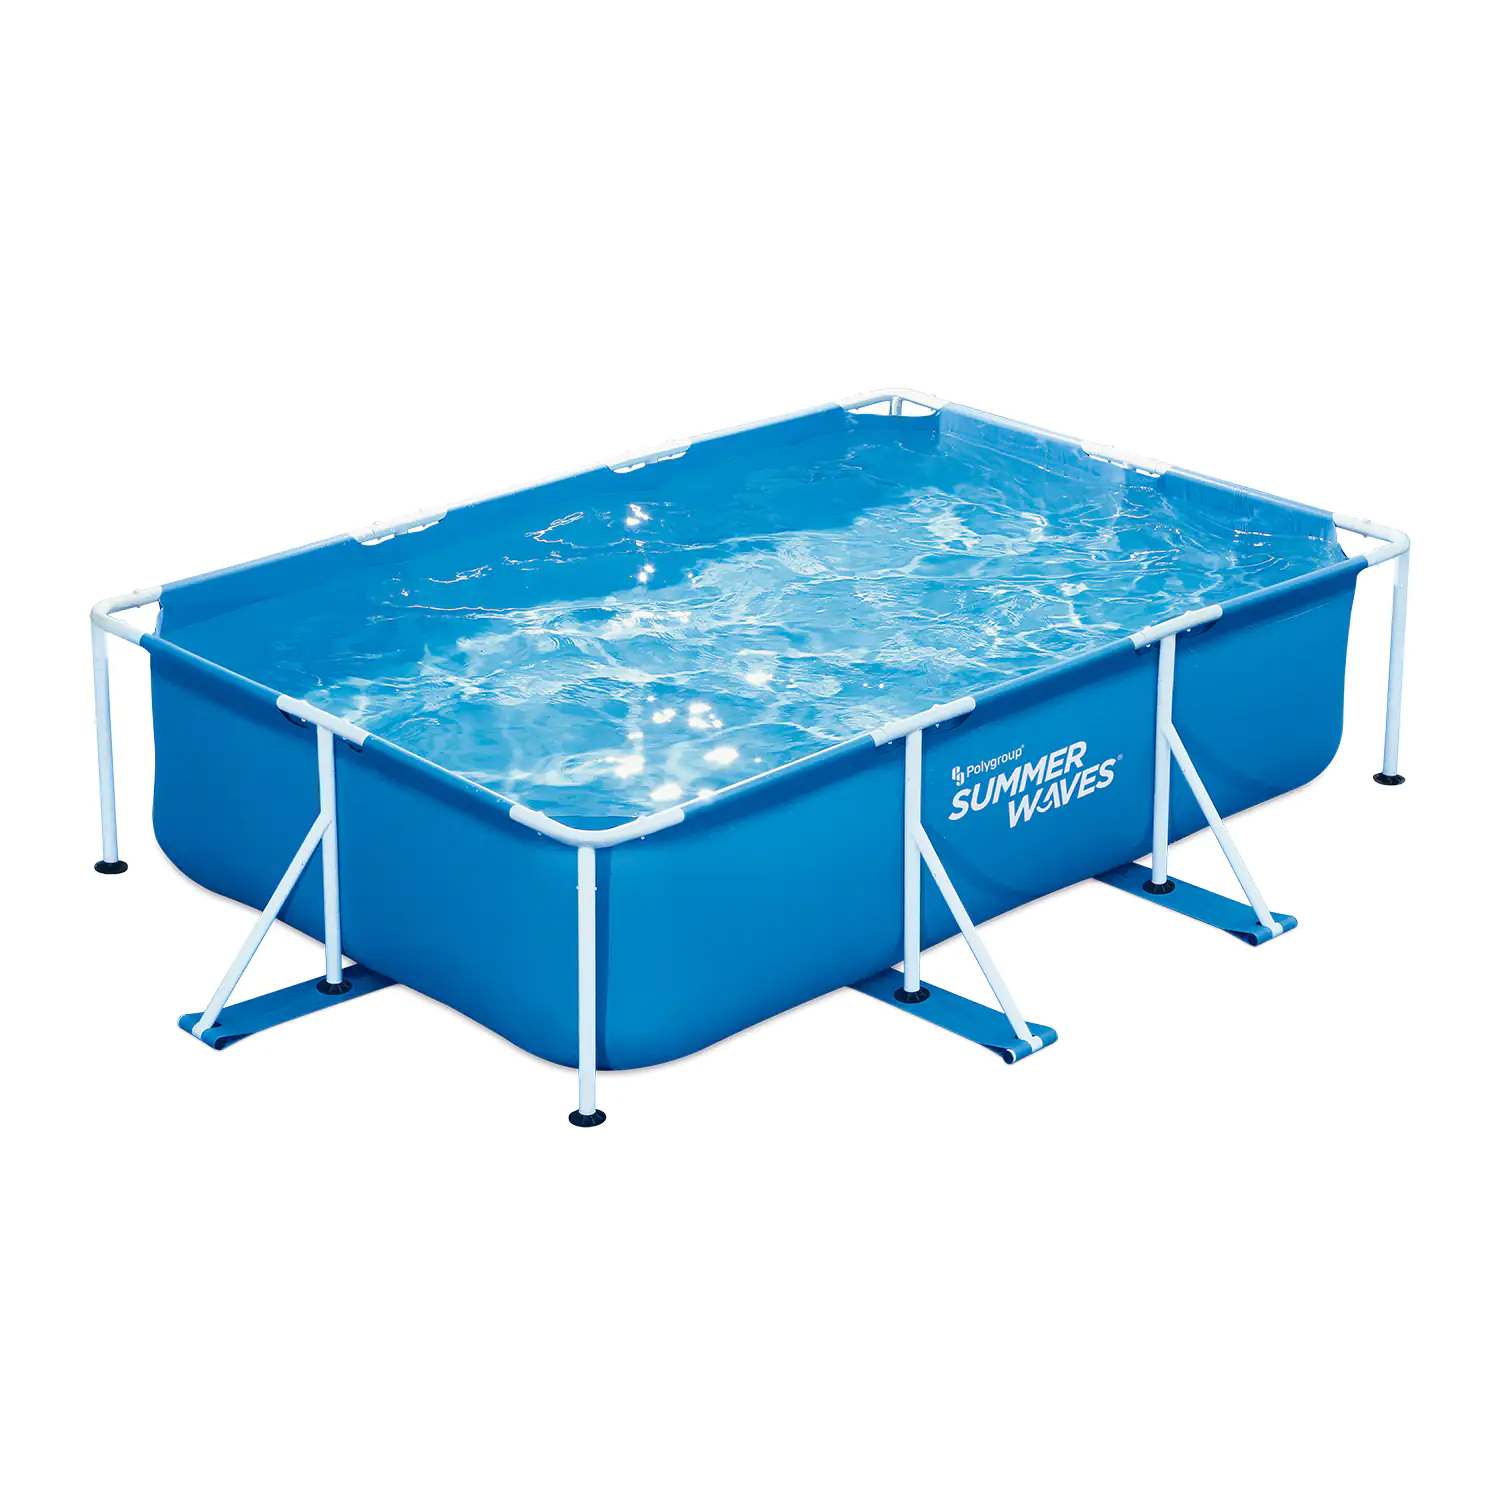 Summer Waves Pool Rectangular Metall x Frame x Pool 2 Globus kaufen Baumarkt 75 m cm | m 3